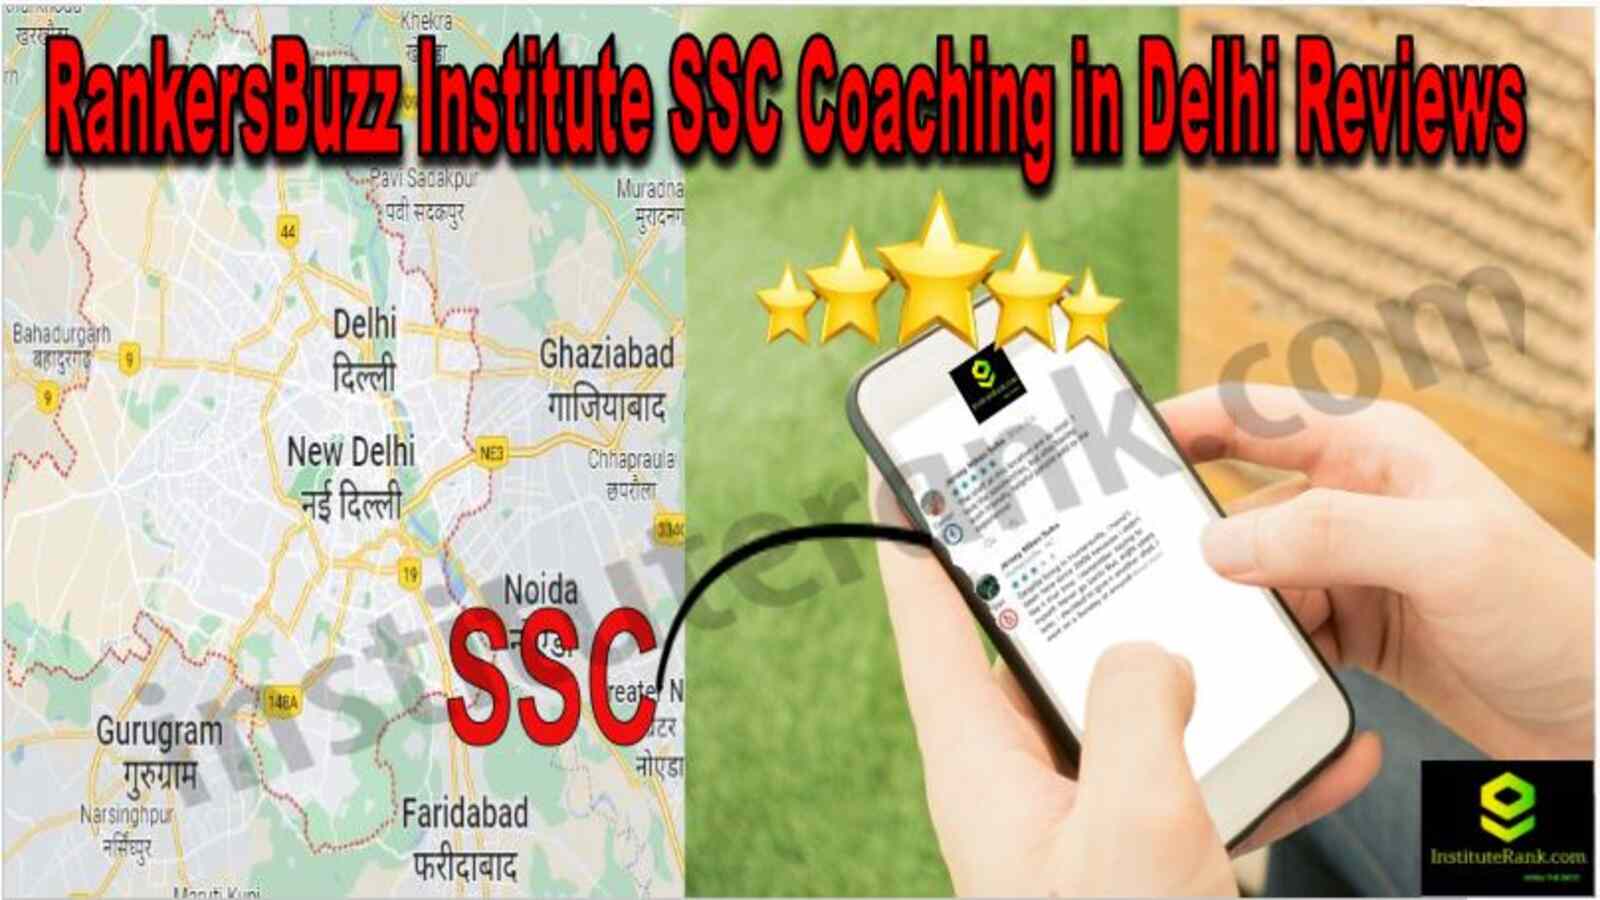 RankersBuzz Institute SSC Coaching in Delhi Reviews